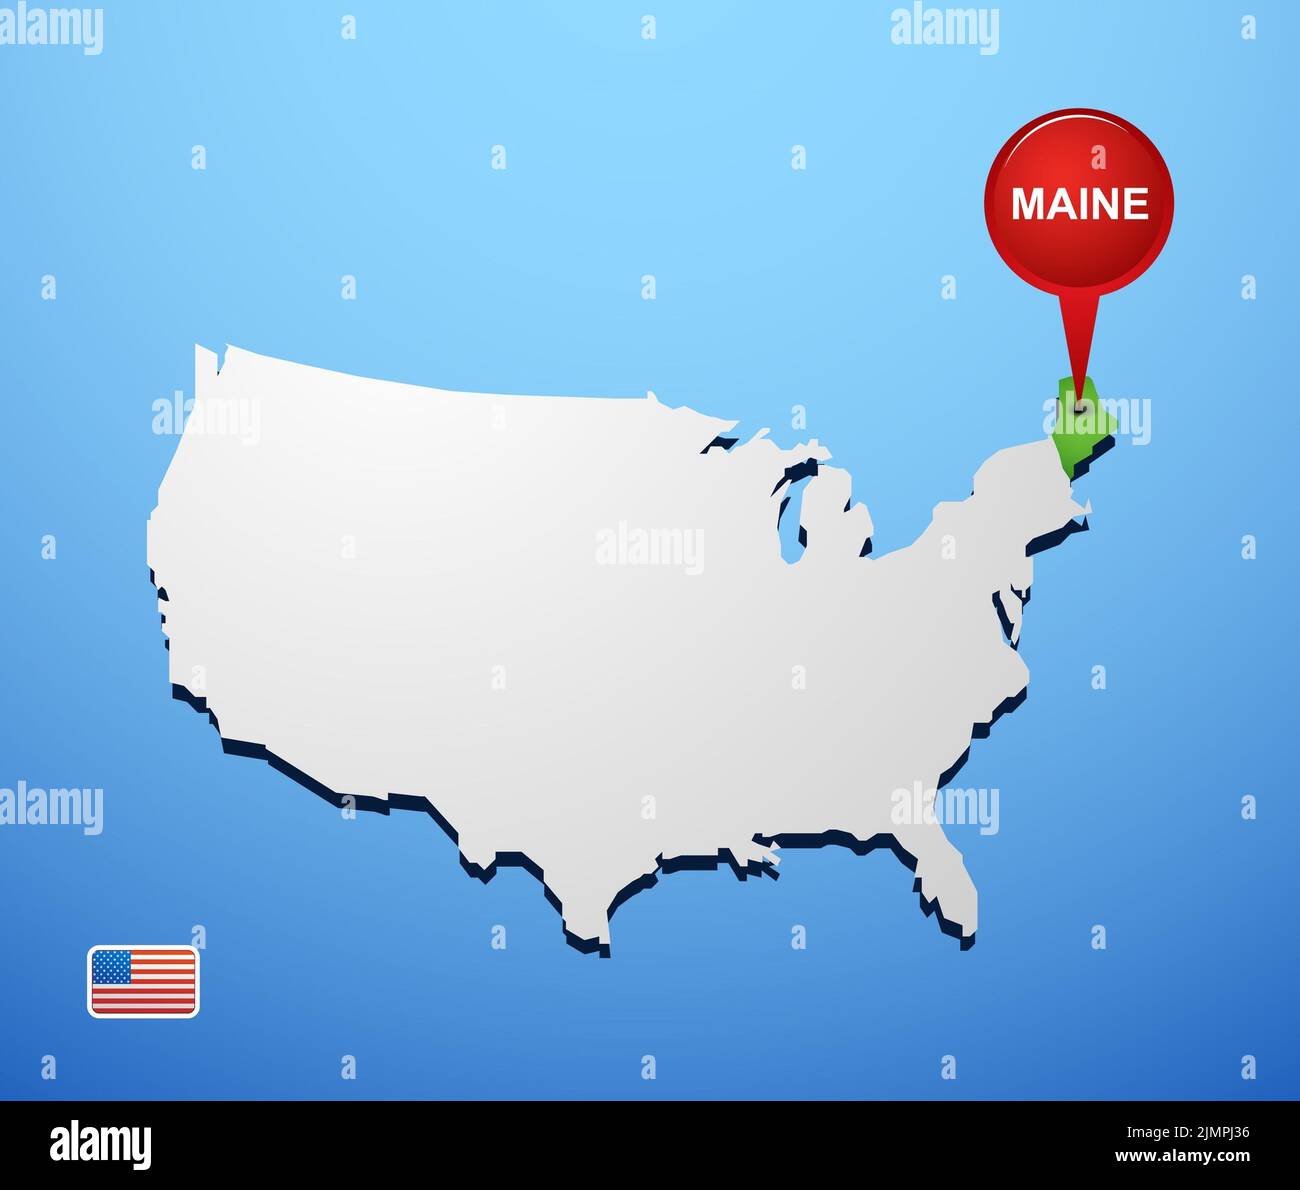 Maine on USA map Stock Photo